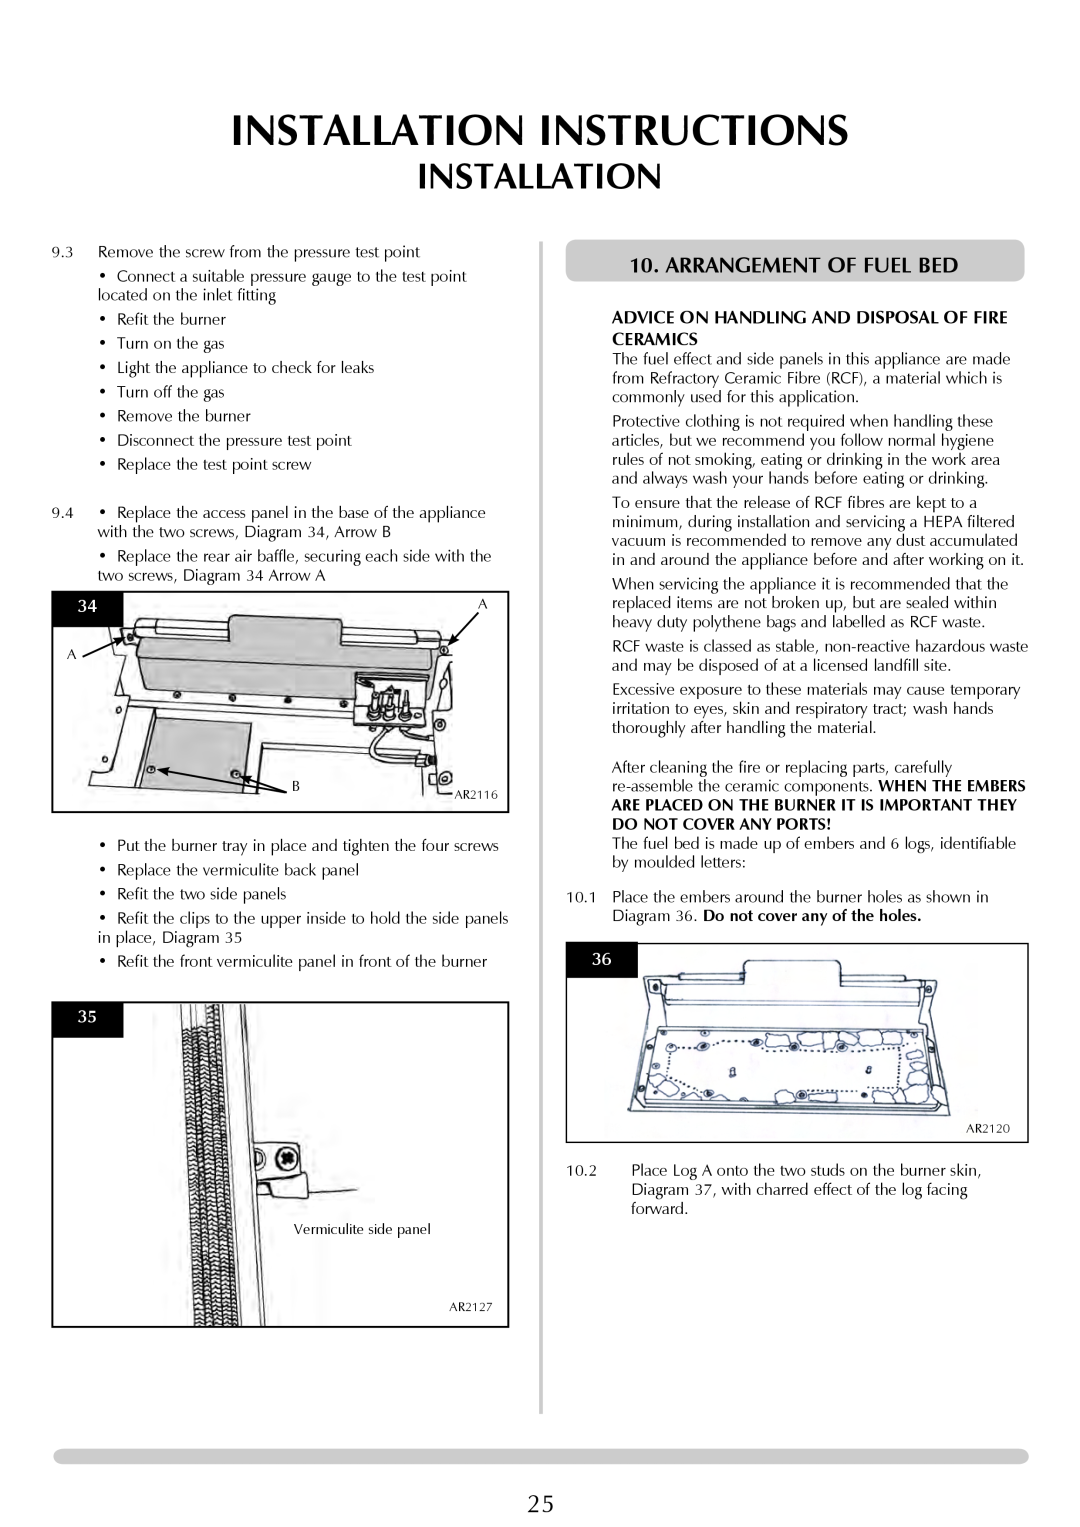 Stovax Studio 22 manual Arrangement Of Fuel Bed, Installation Instructions 